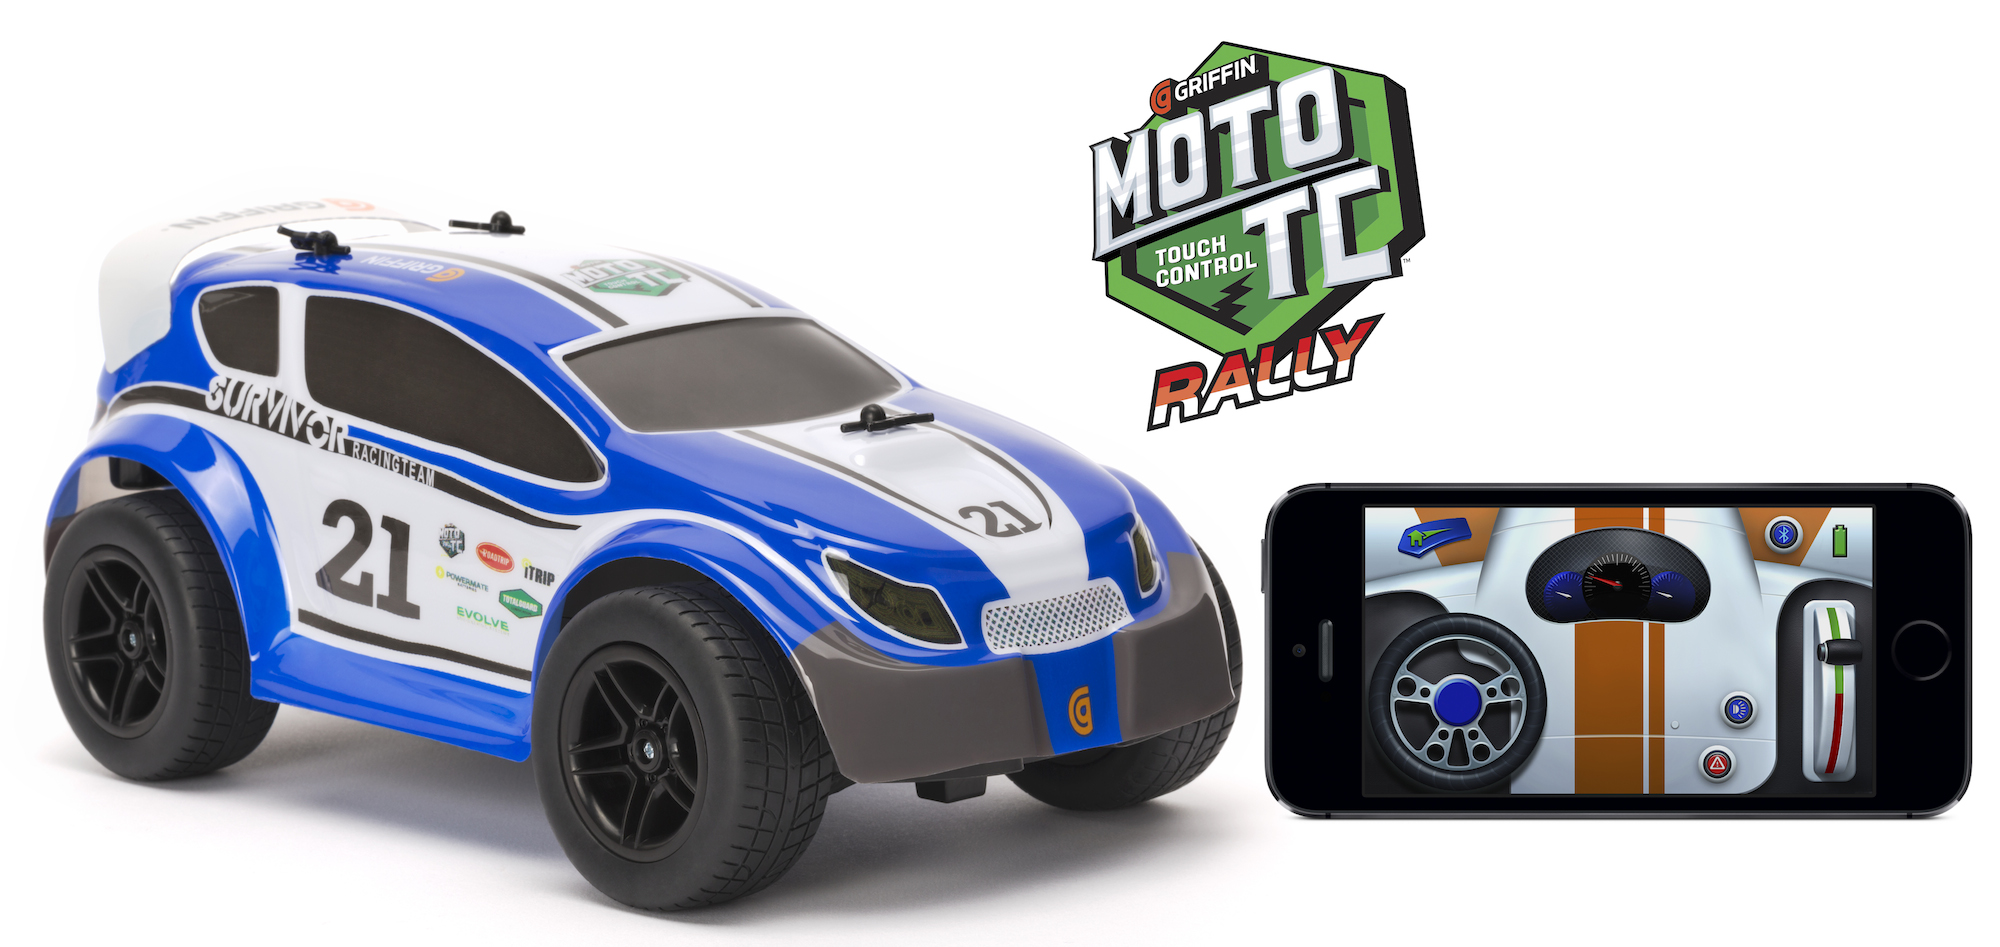 Moto_TC_Rally_header_new_high_res2